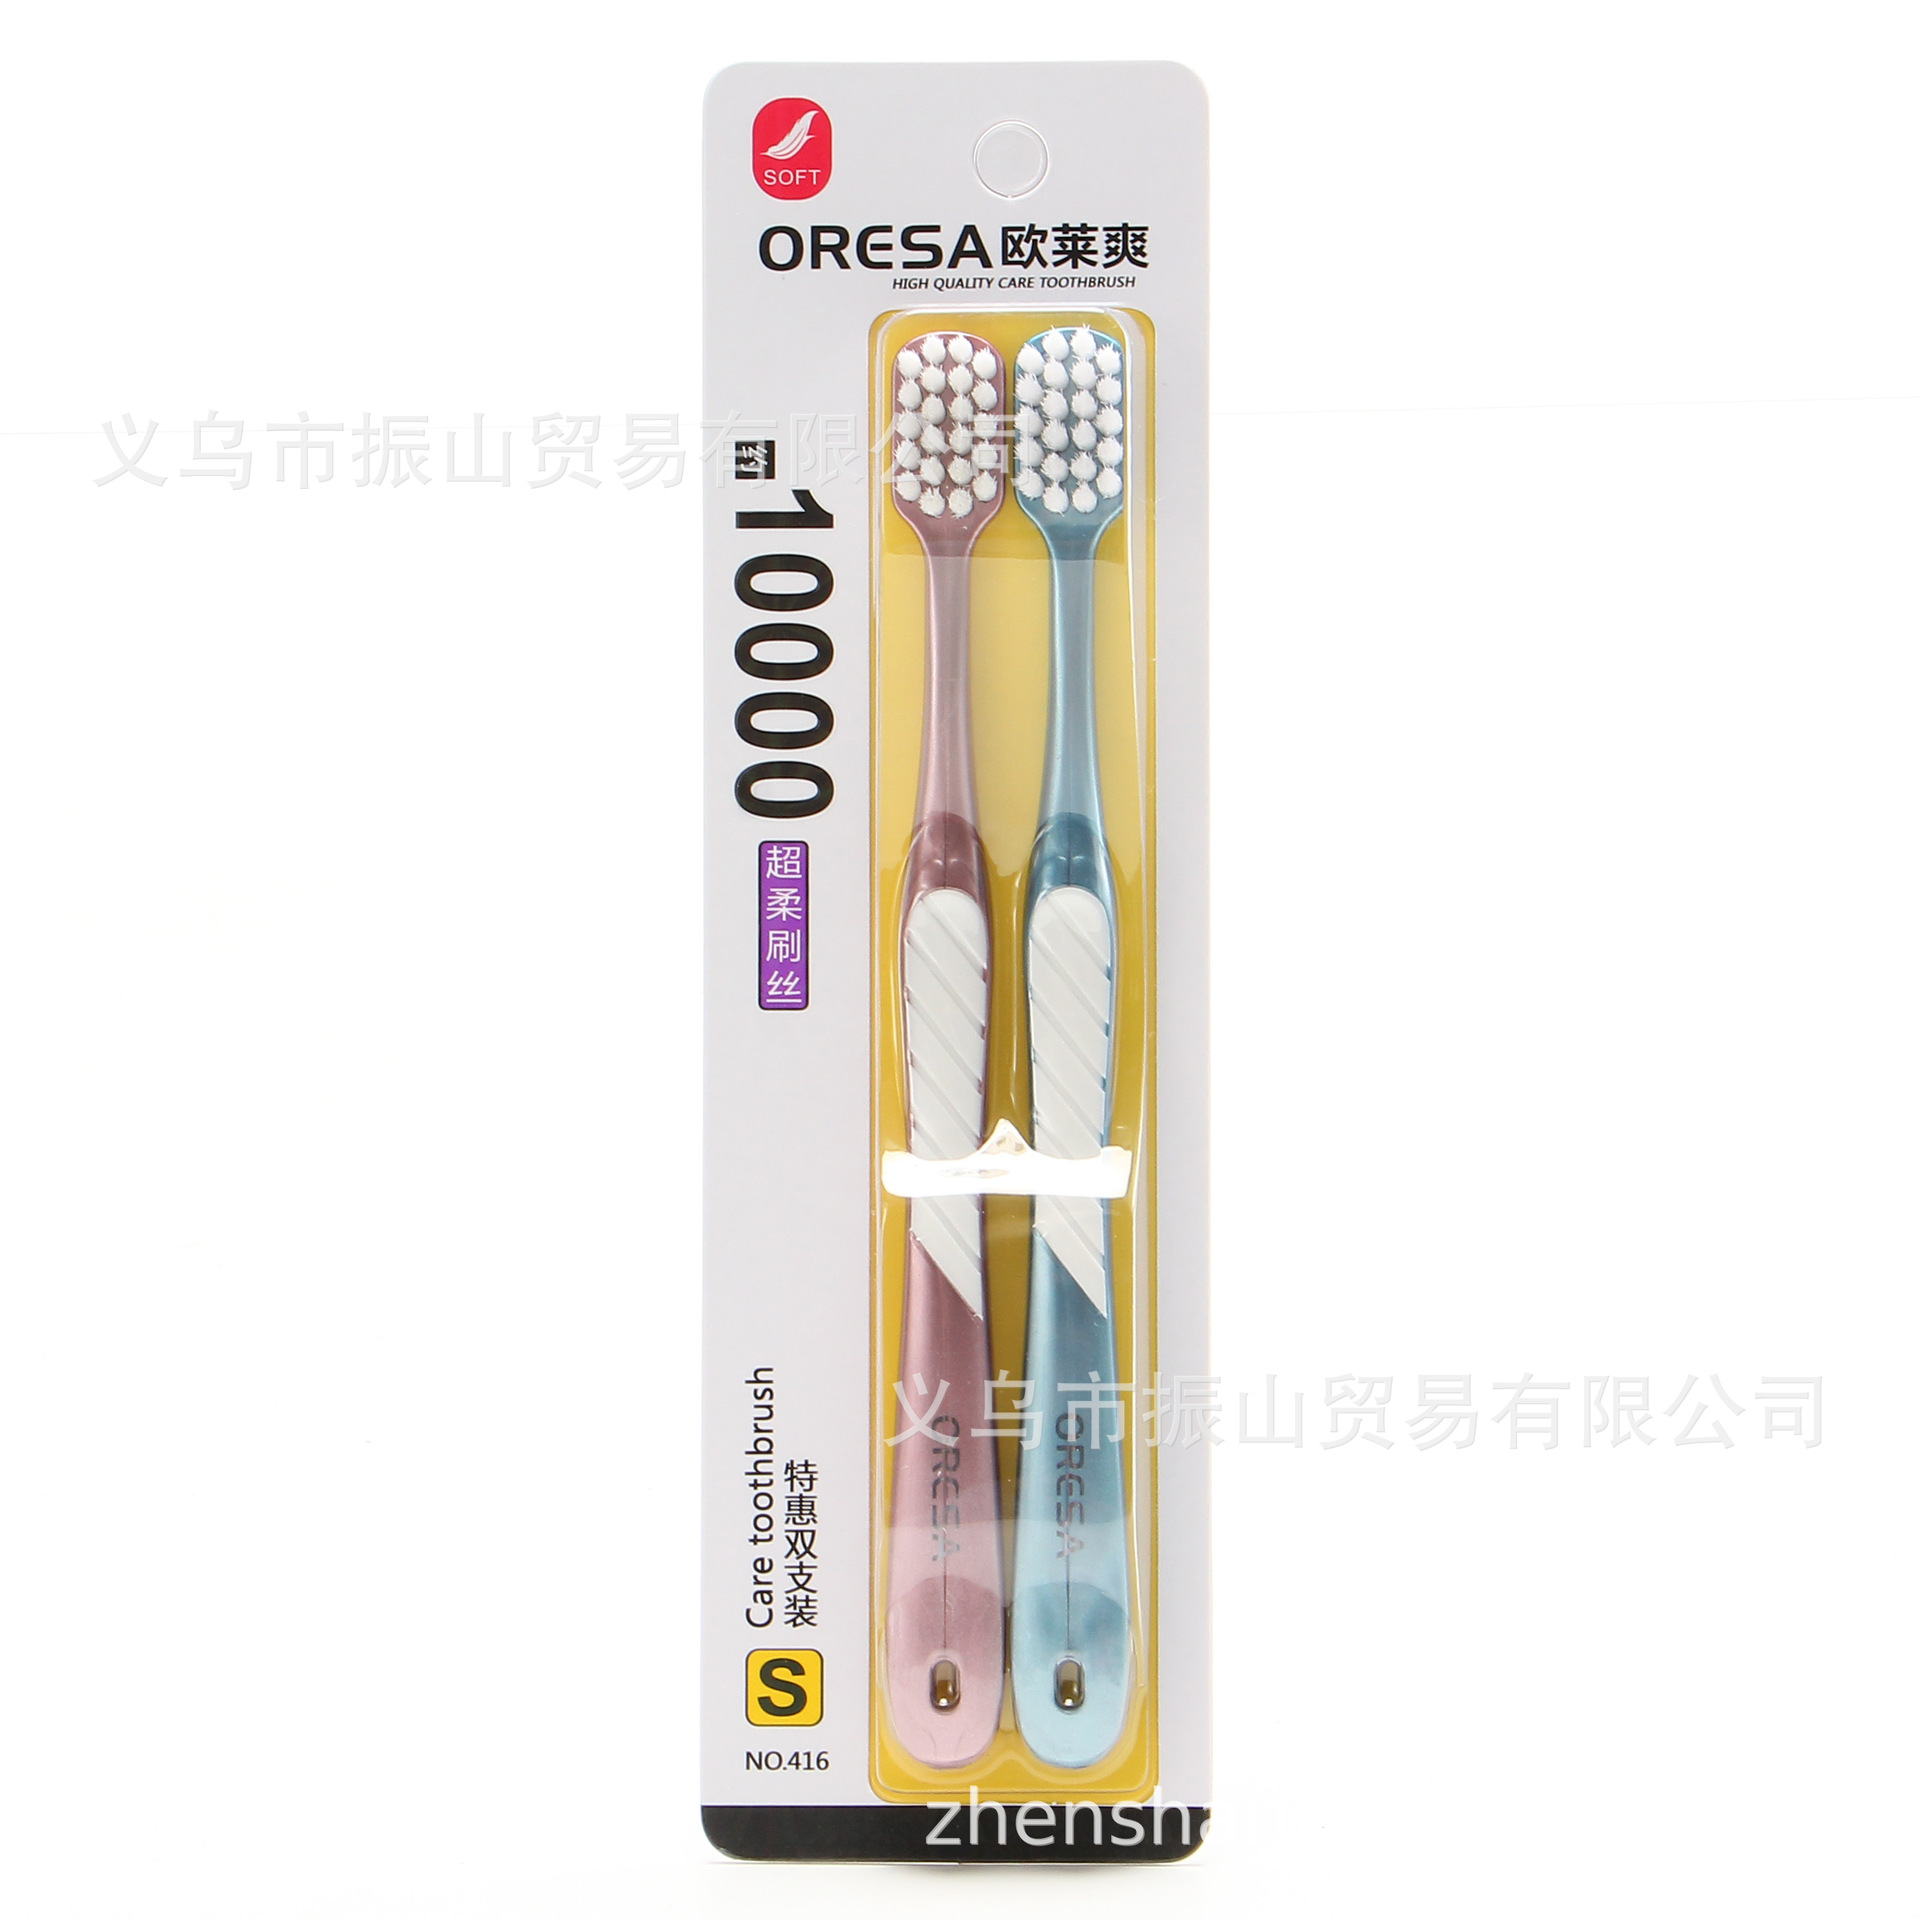 olaishuang 416 simple fashion couple wear round hole 0.12 slender feather wangen bristle beauty toothbrush